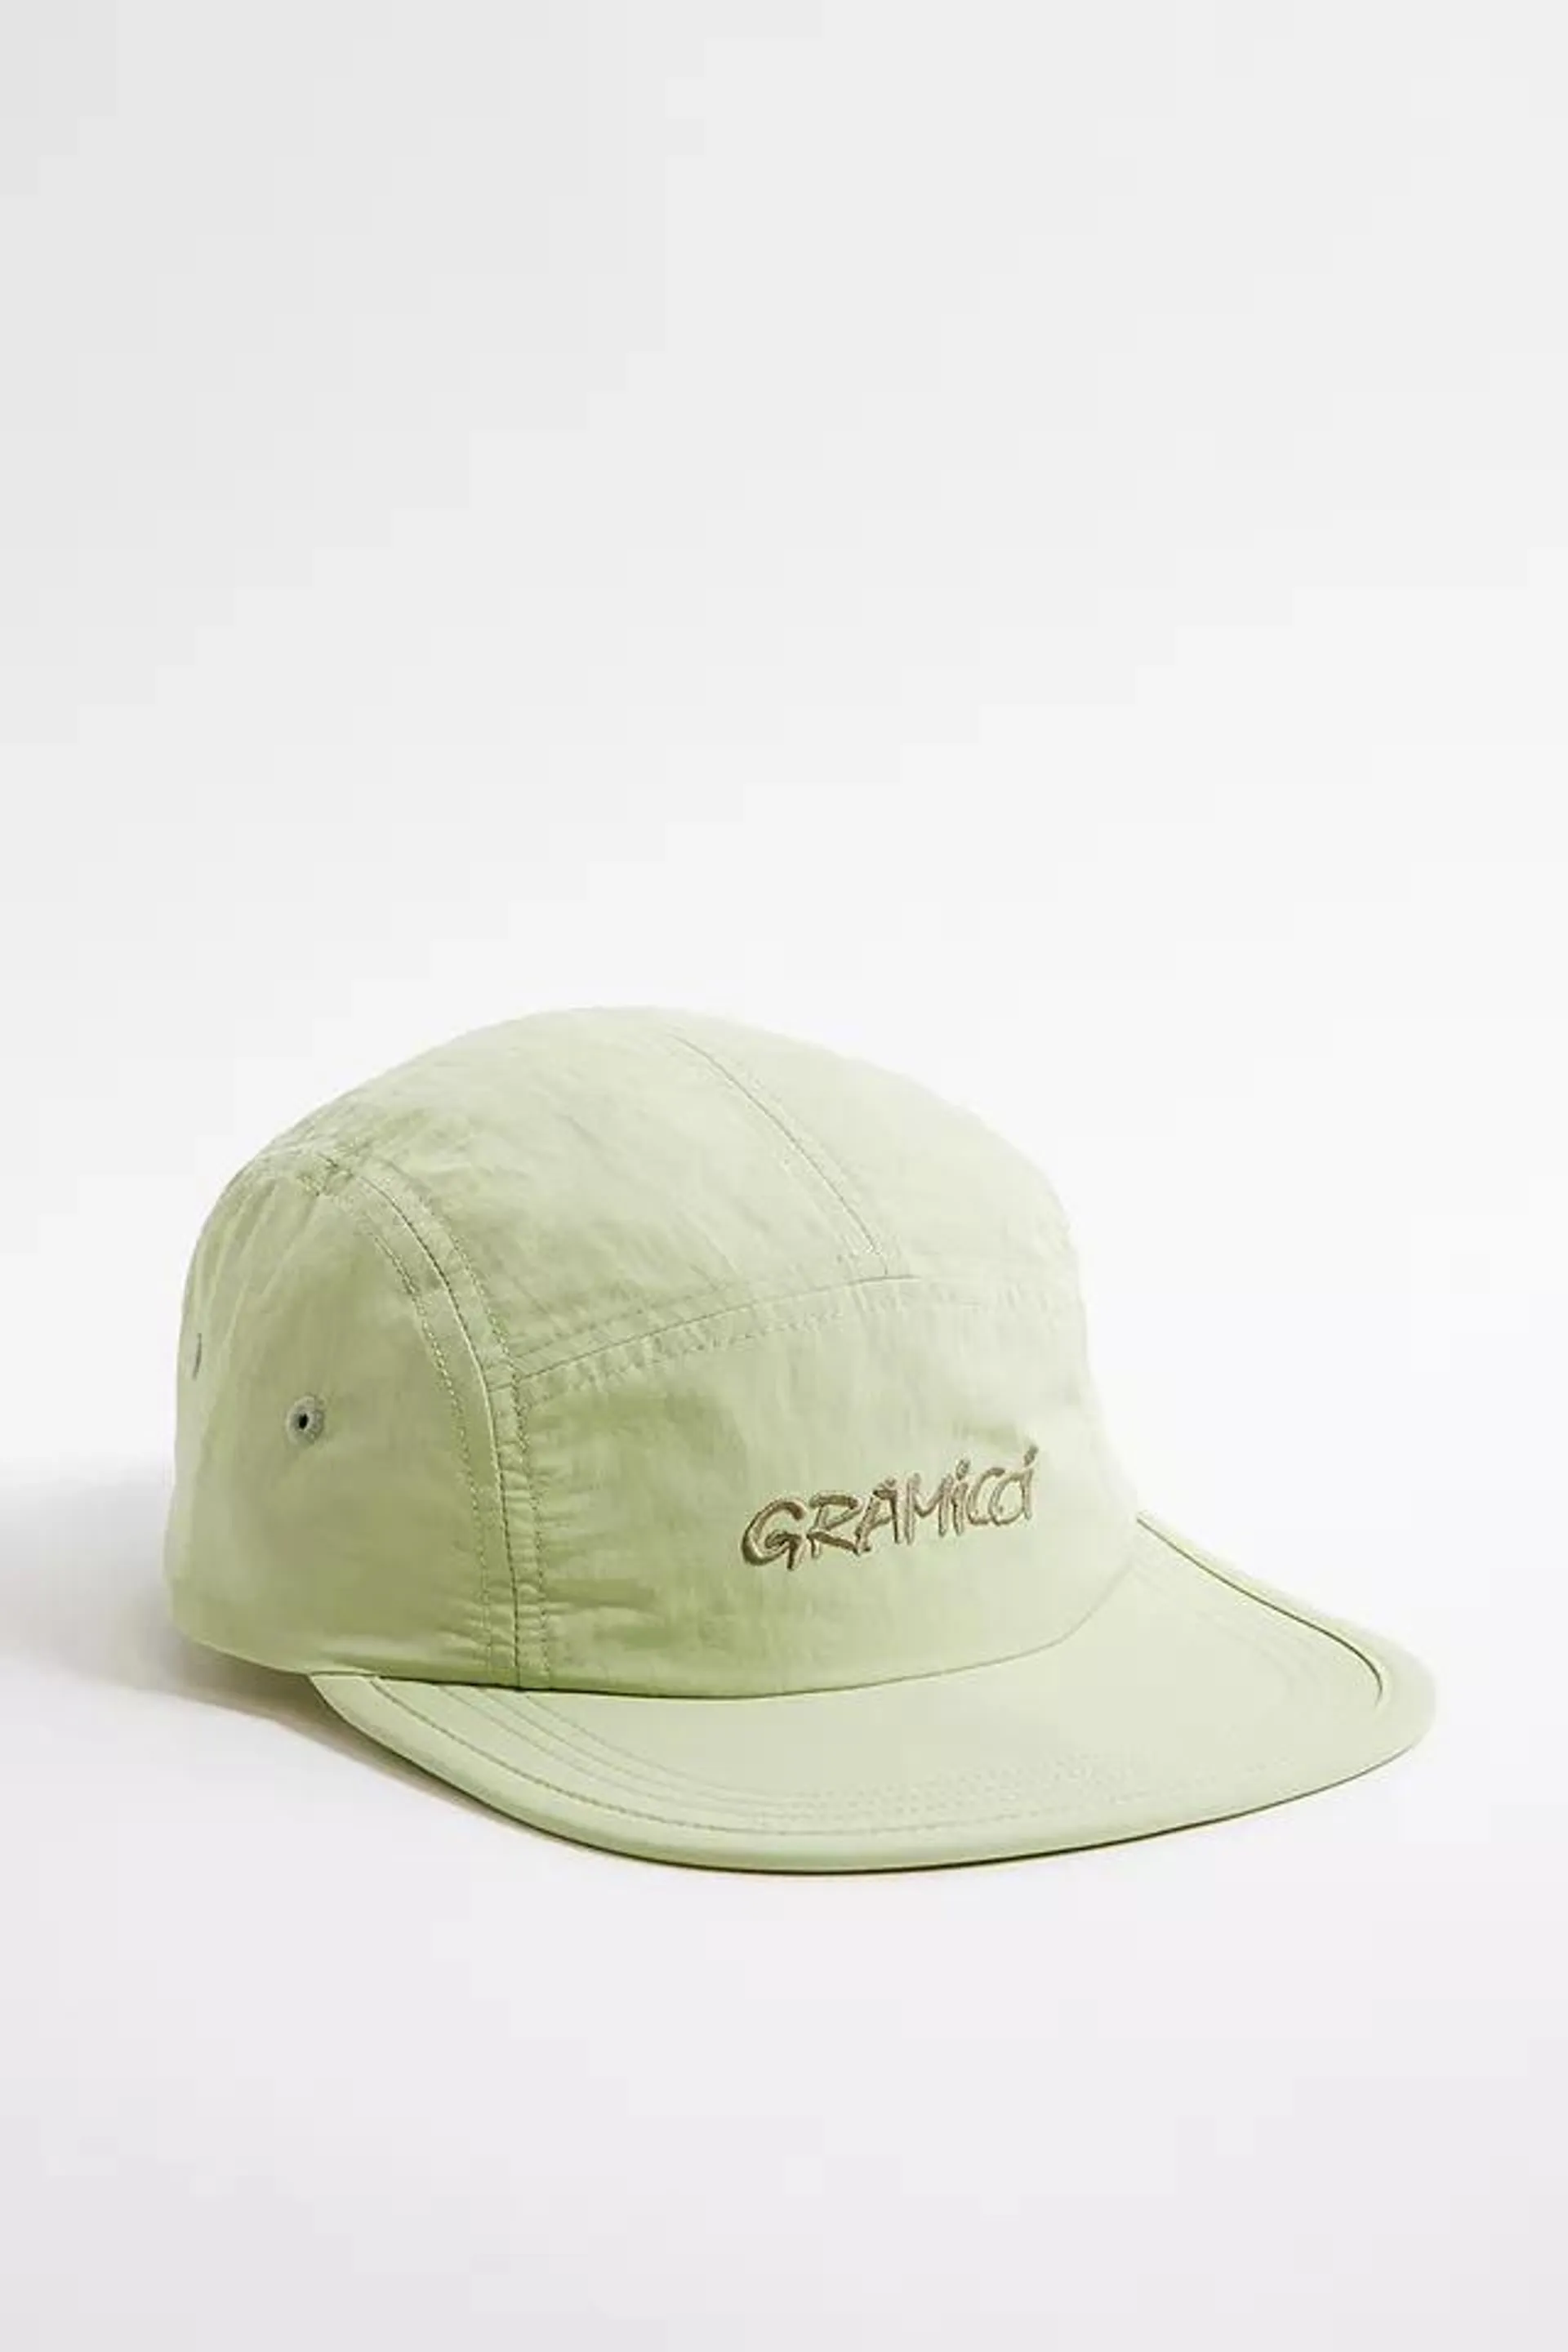 Gramicci – Cap in Limettengrün aus Nylon